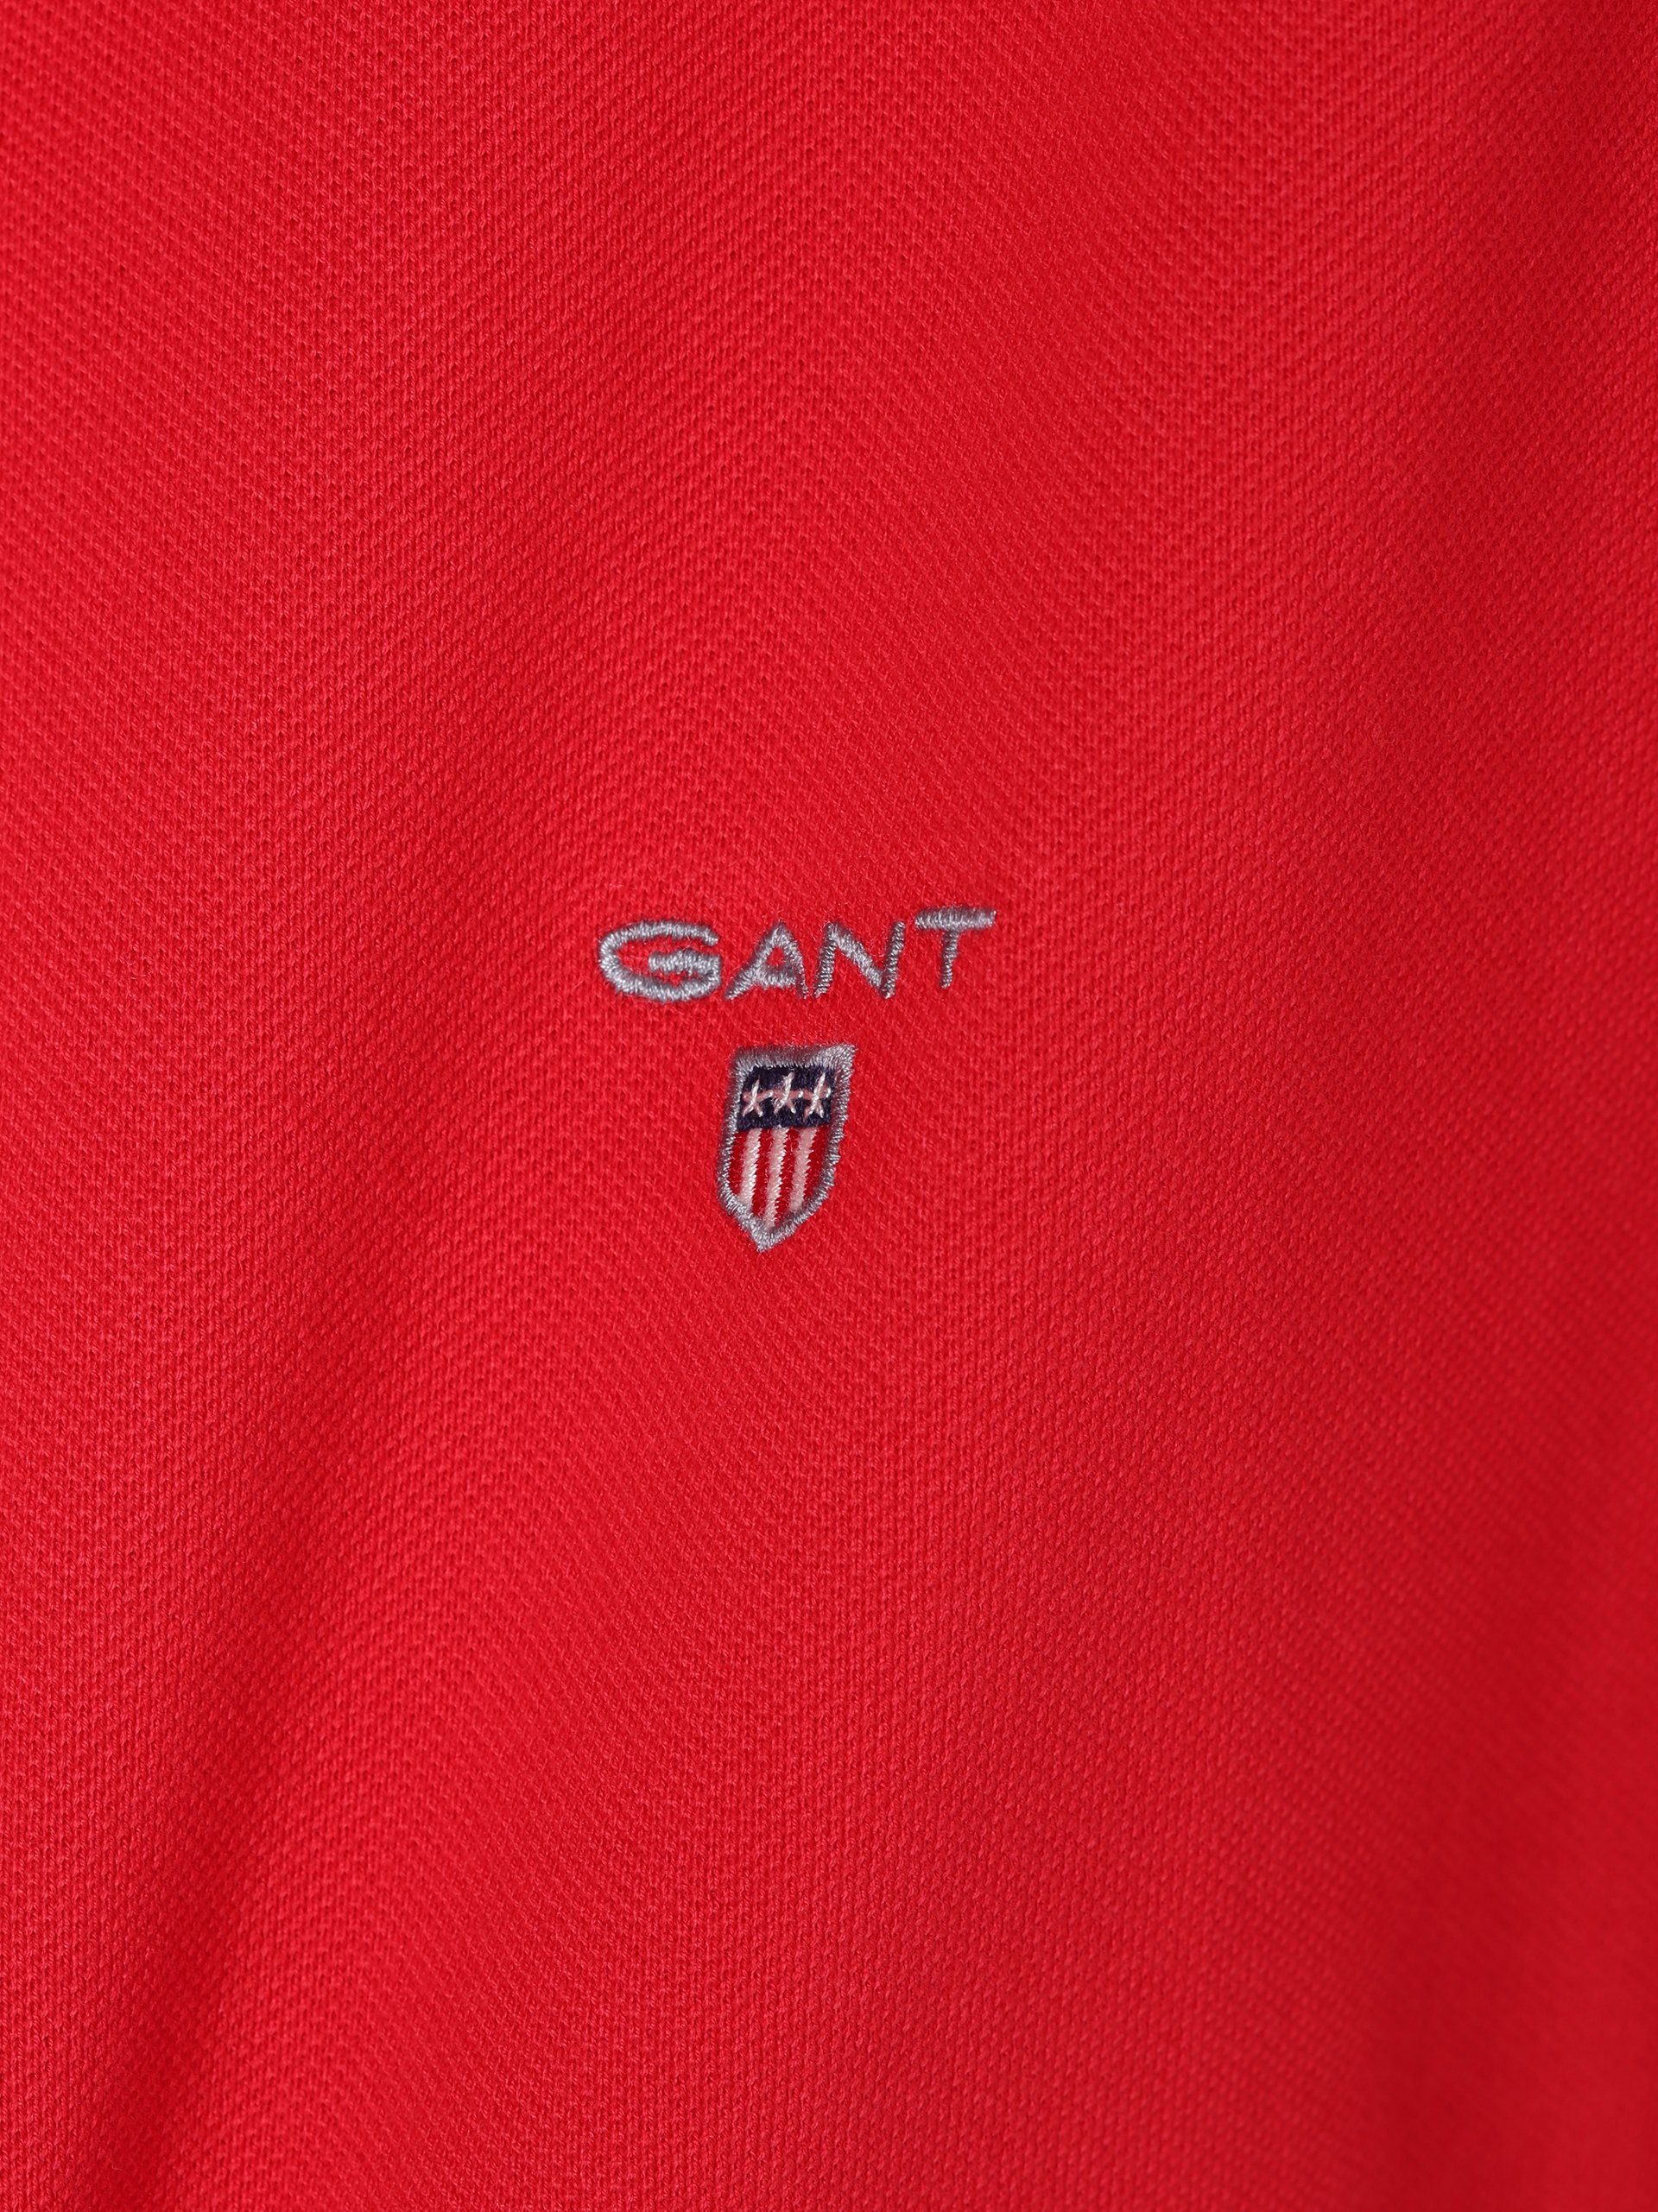 Poloshirt Gant rot